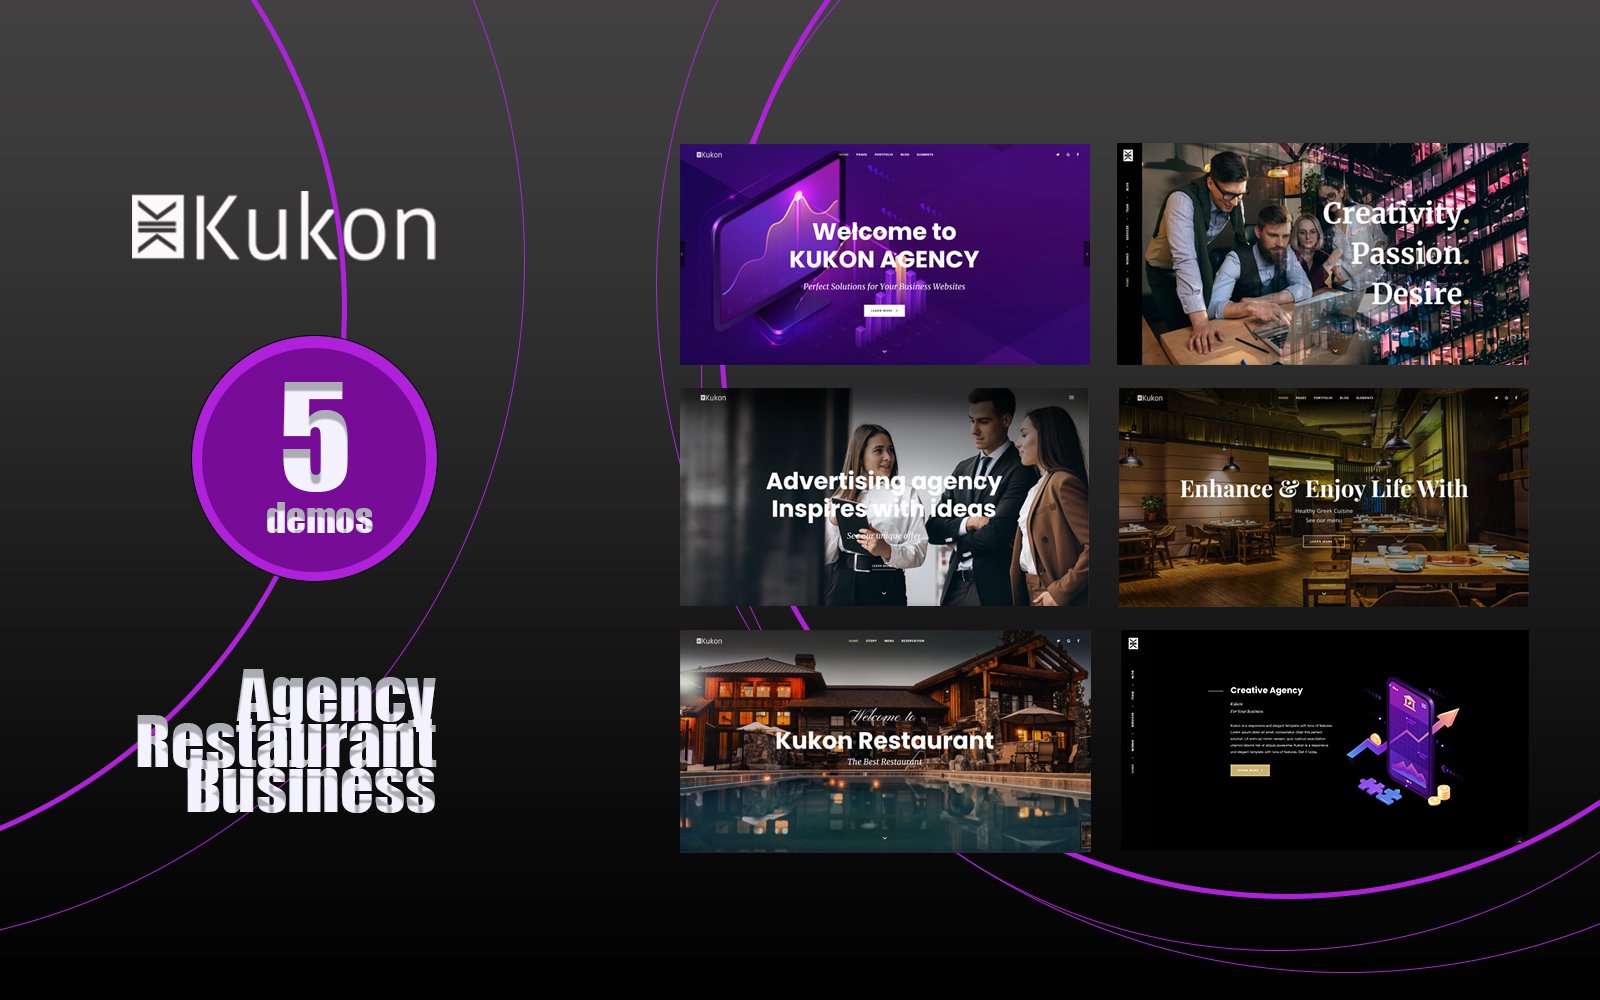 Kukon | Agency, Restaurant, Business Theme Website template